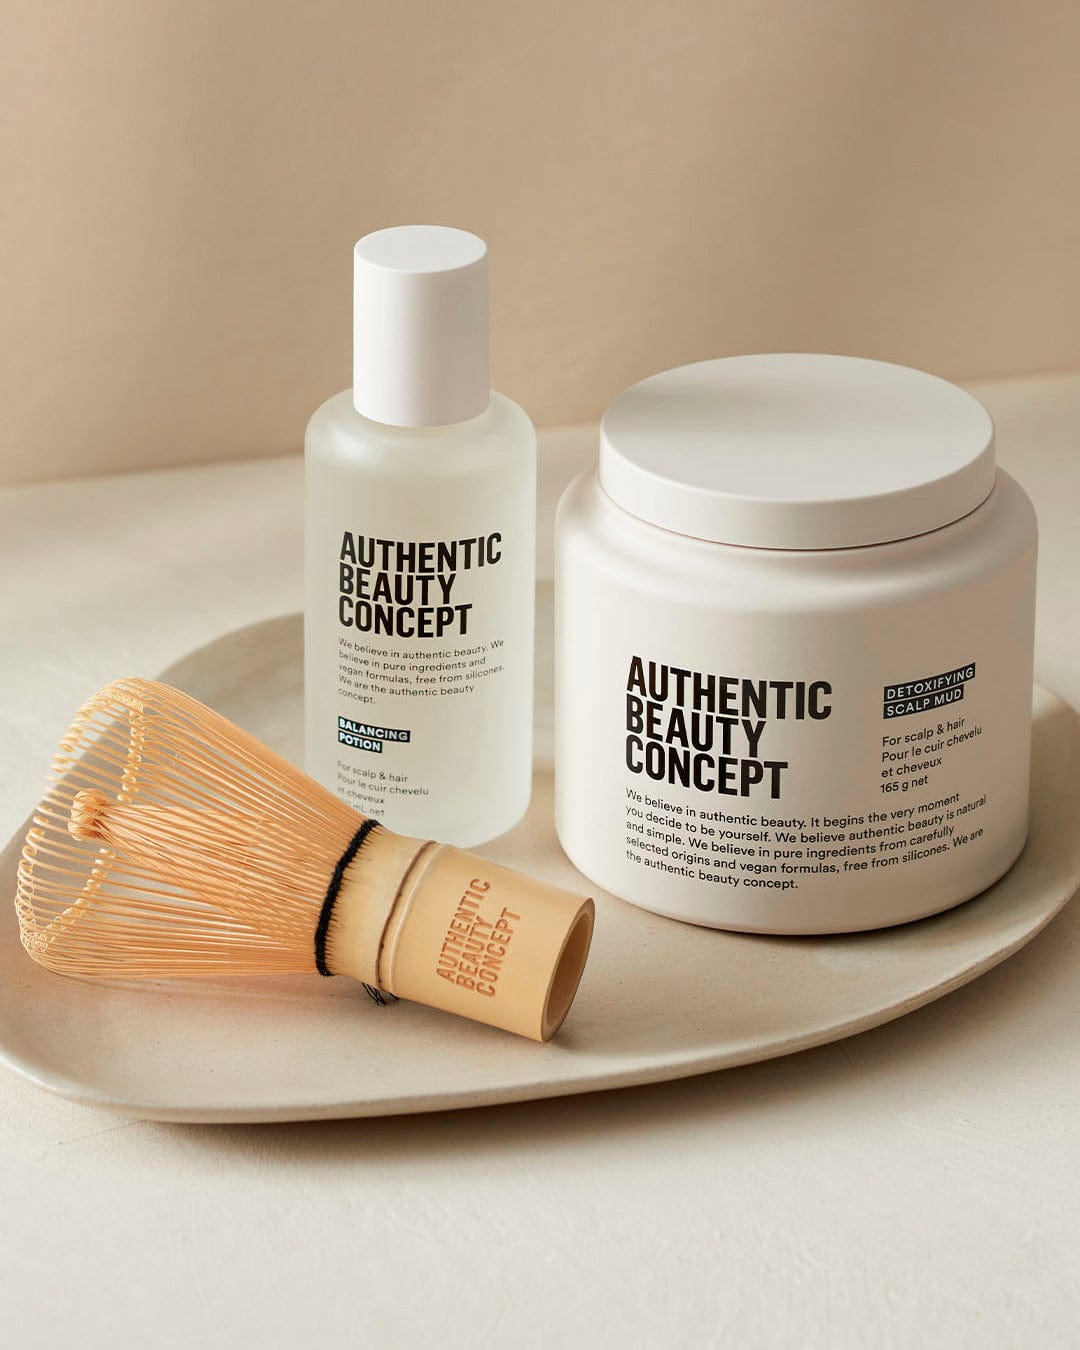 Authentic Beauty Concept Tratamiento Balancing Potion TRT 100ml Roberta Beauty Club Tienda Online Productos de Peluqueria